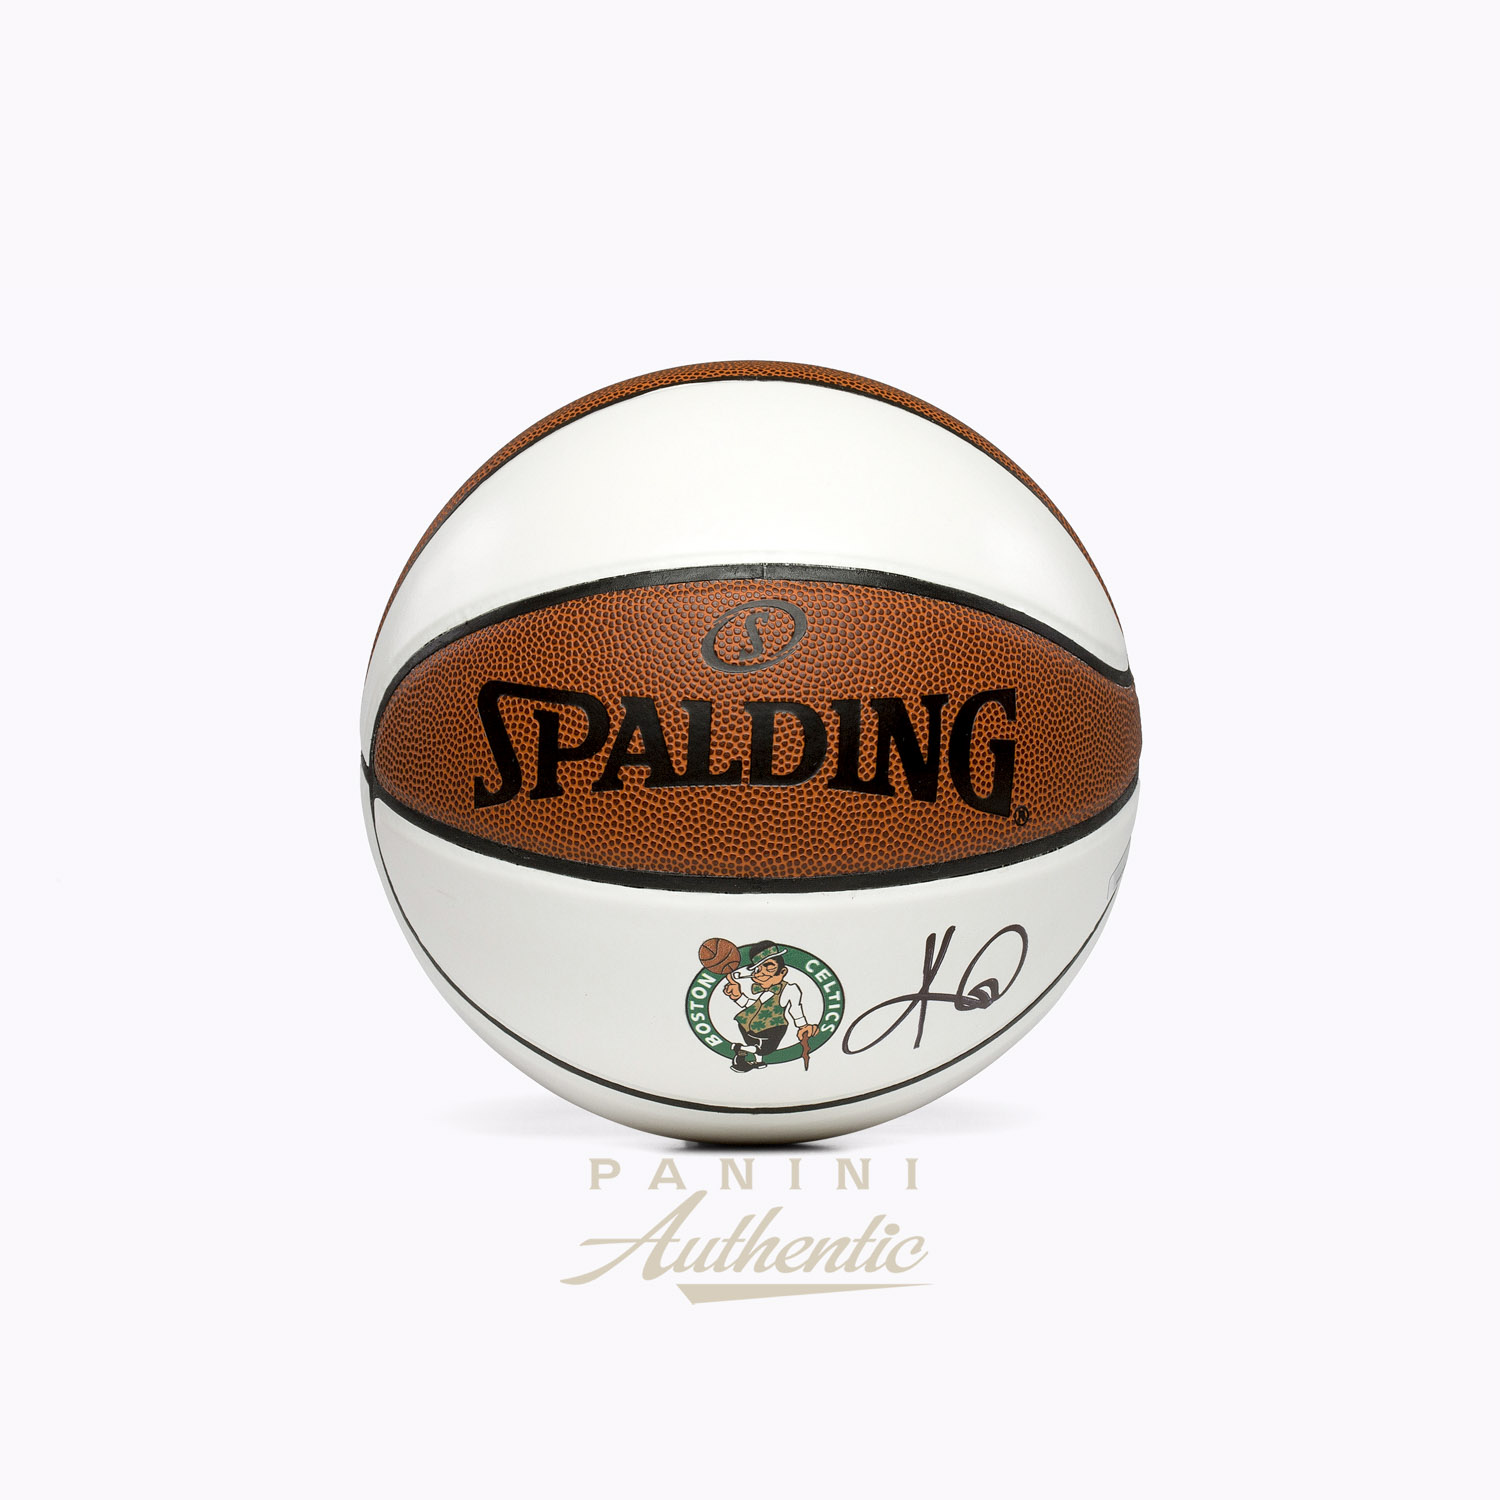 Kyrie Irving Autographed Boston Celtics 